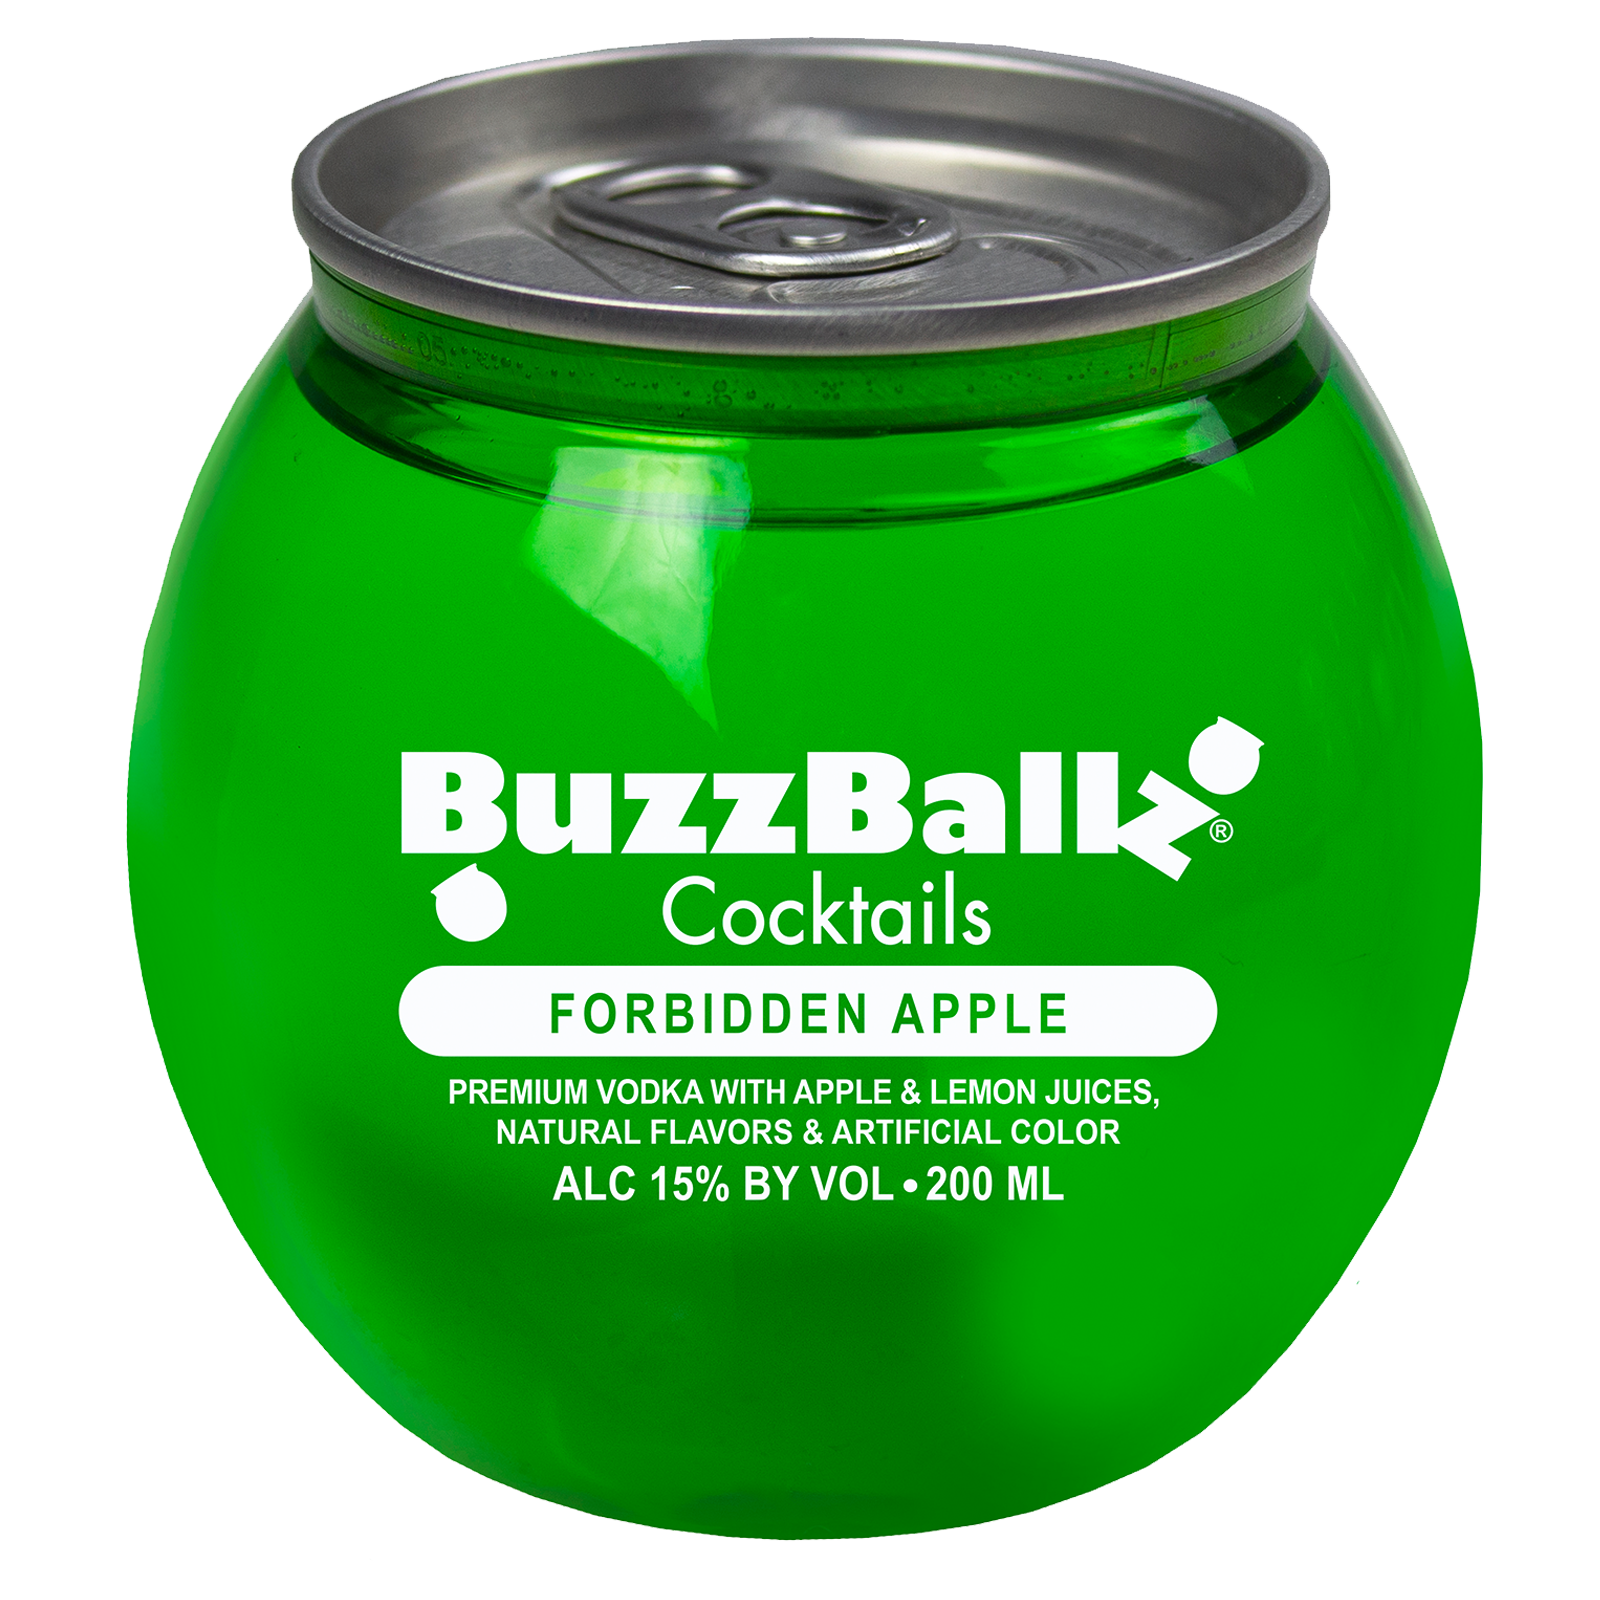 BuzzBallz Cocktails Forbidden Apple 200ml (30 Proof)